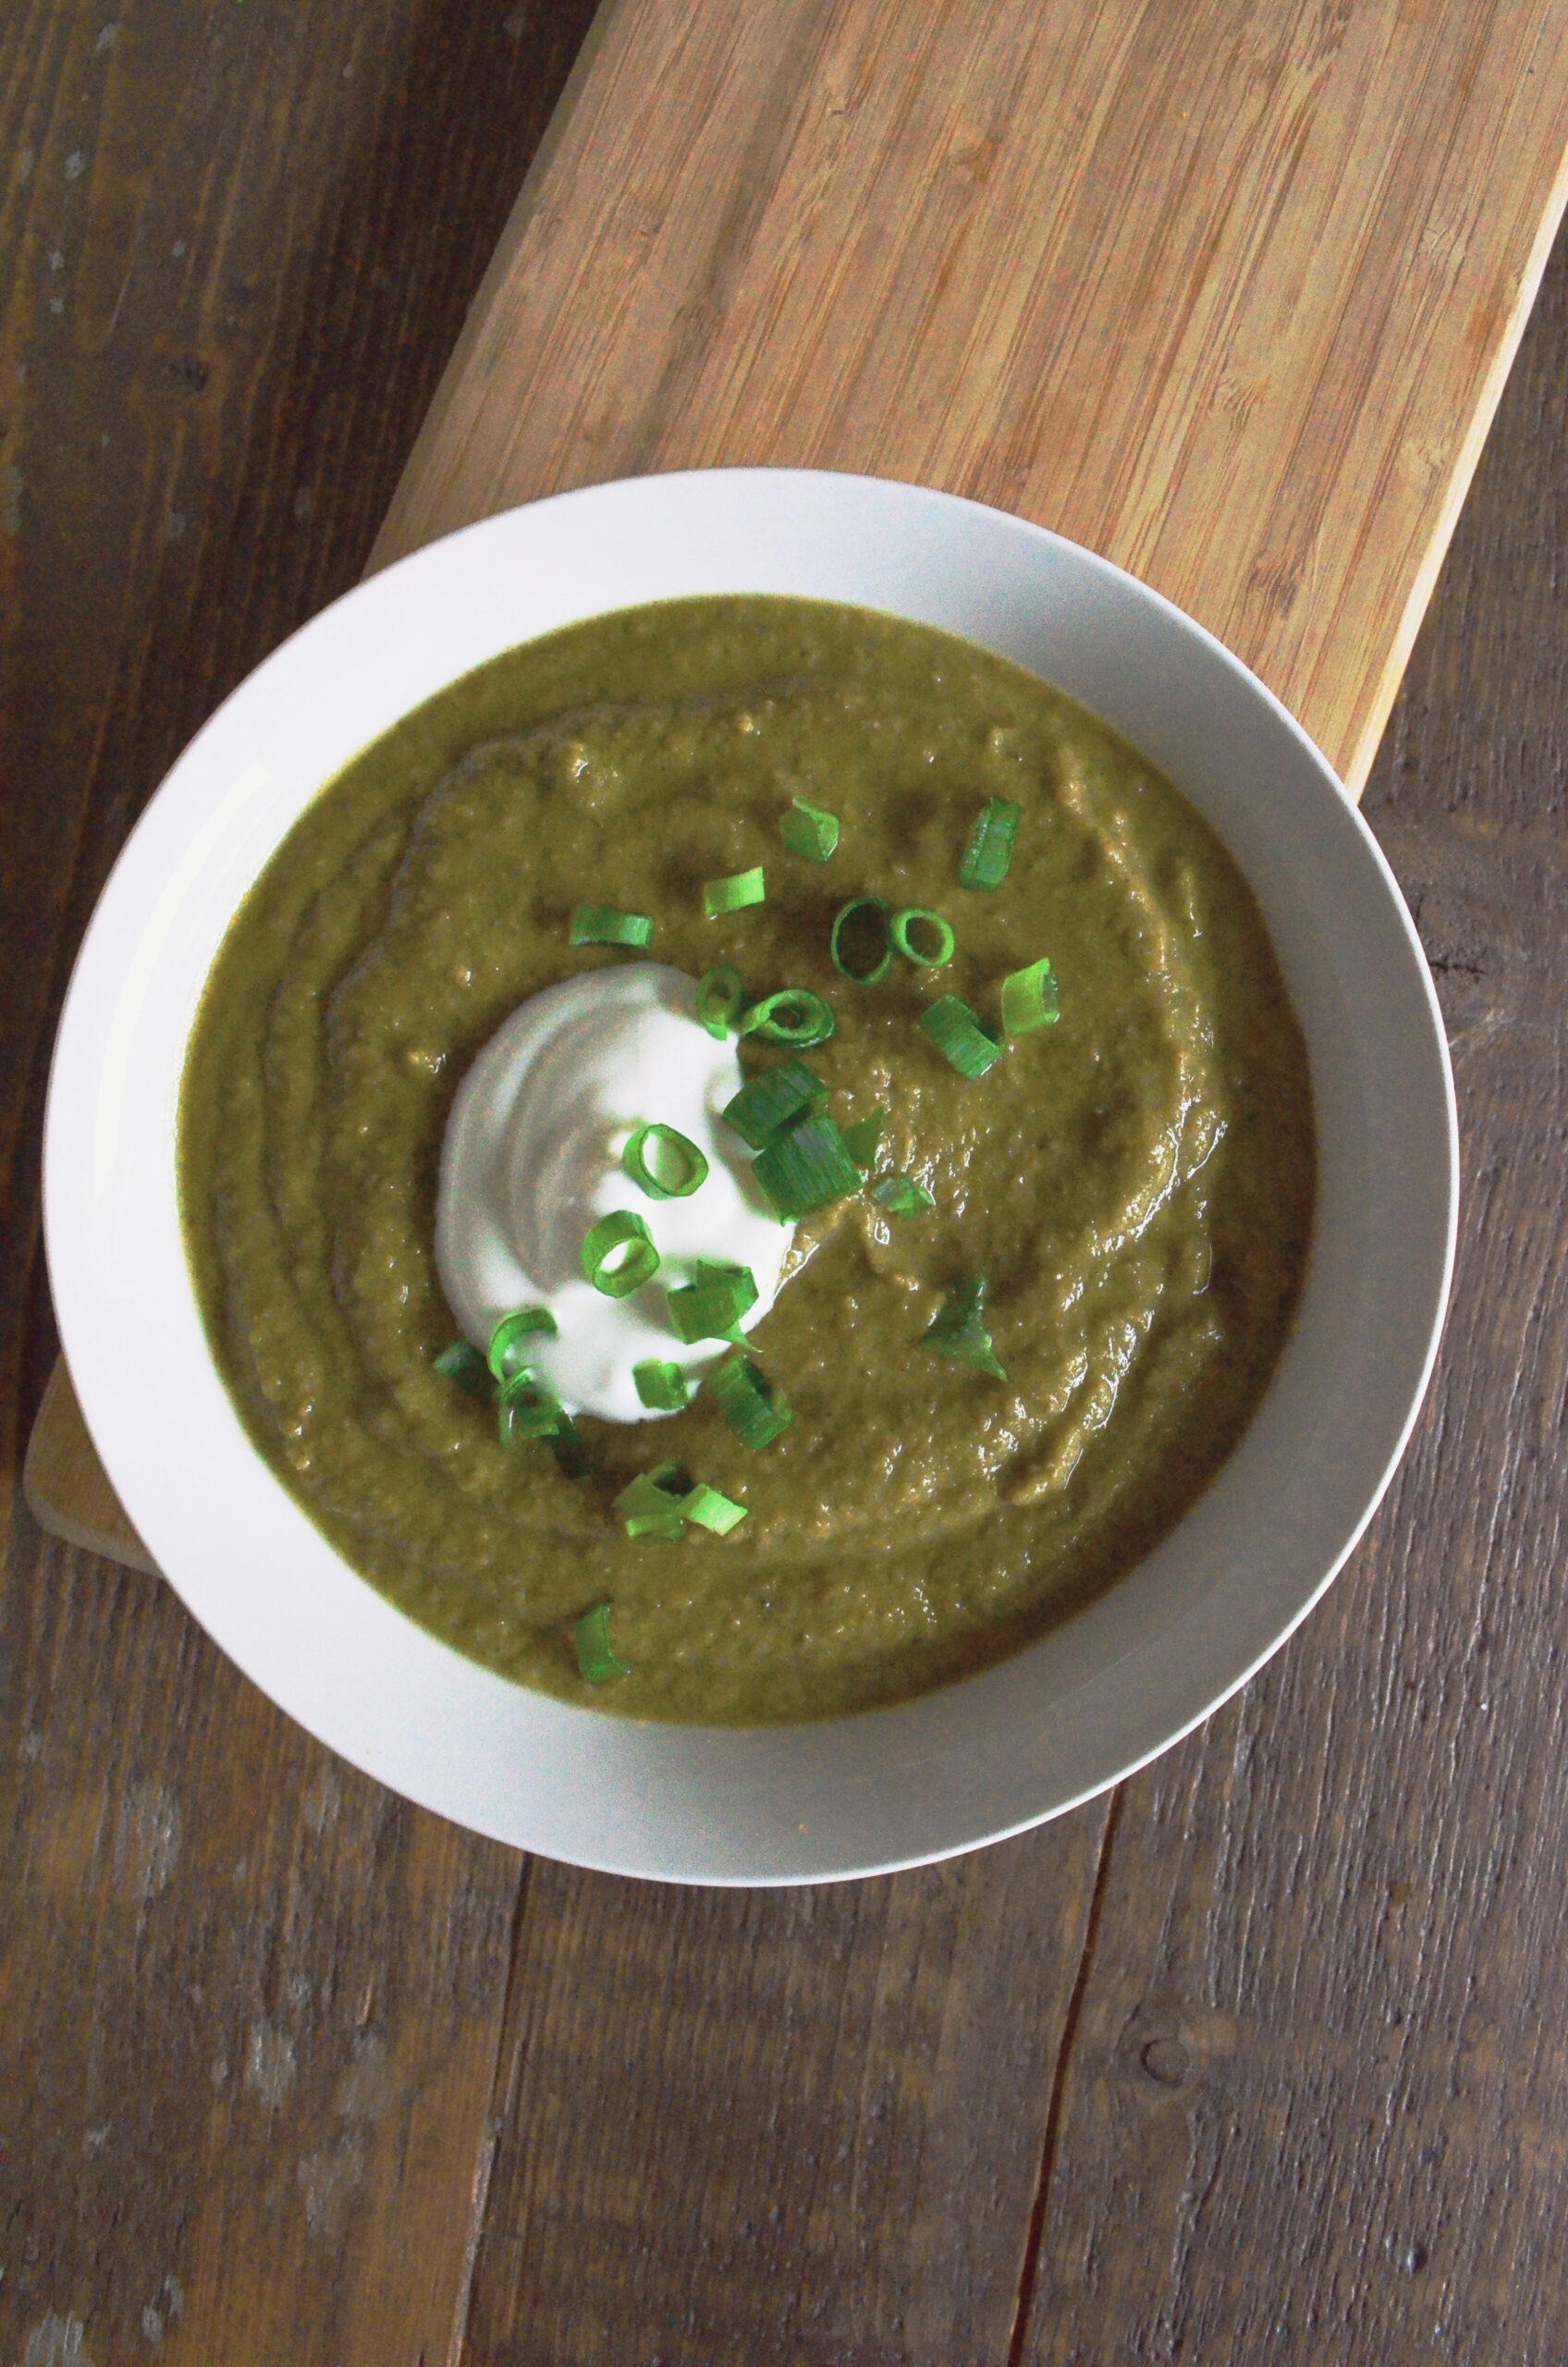 Broccoli and lentil soup